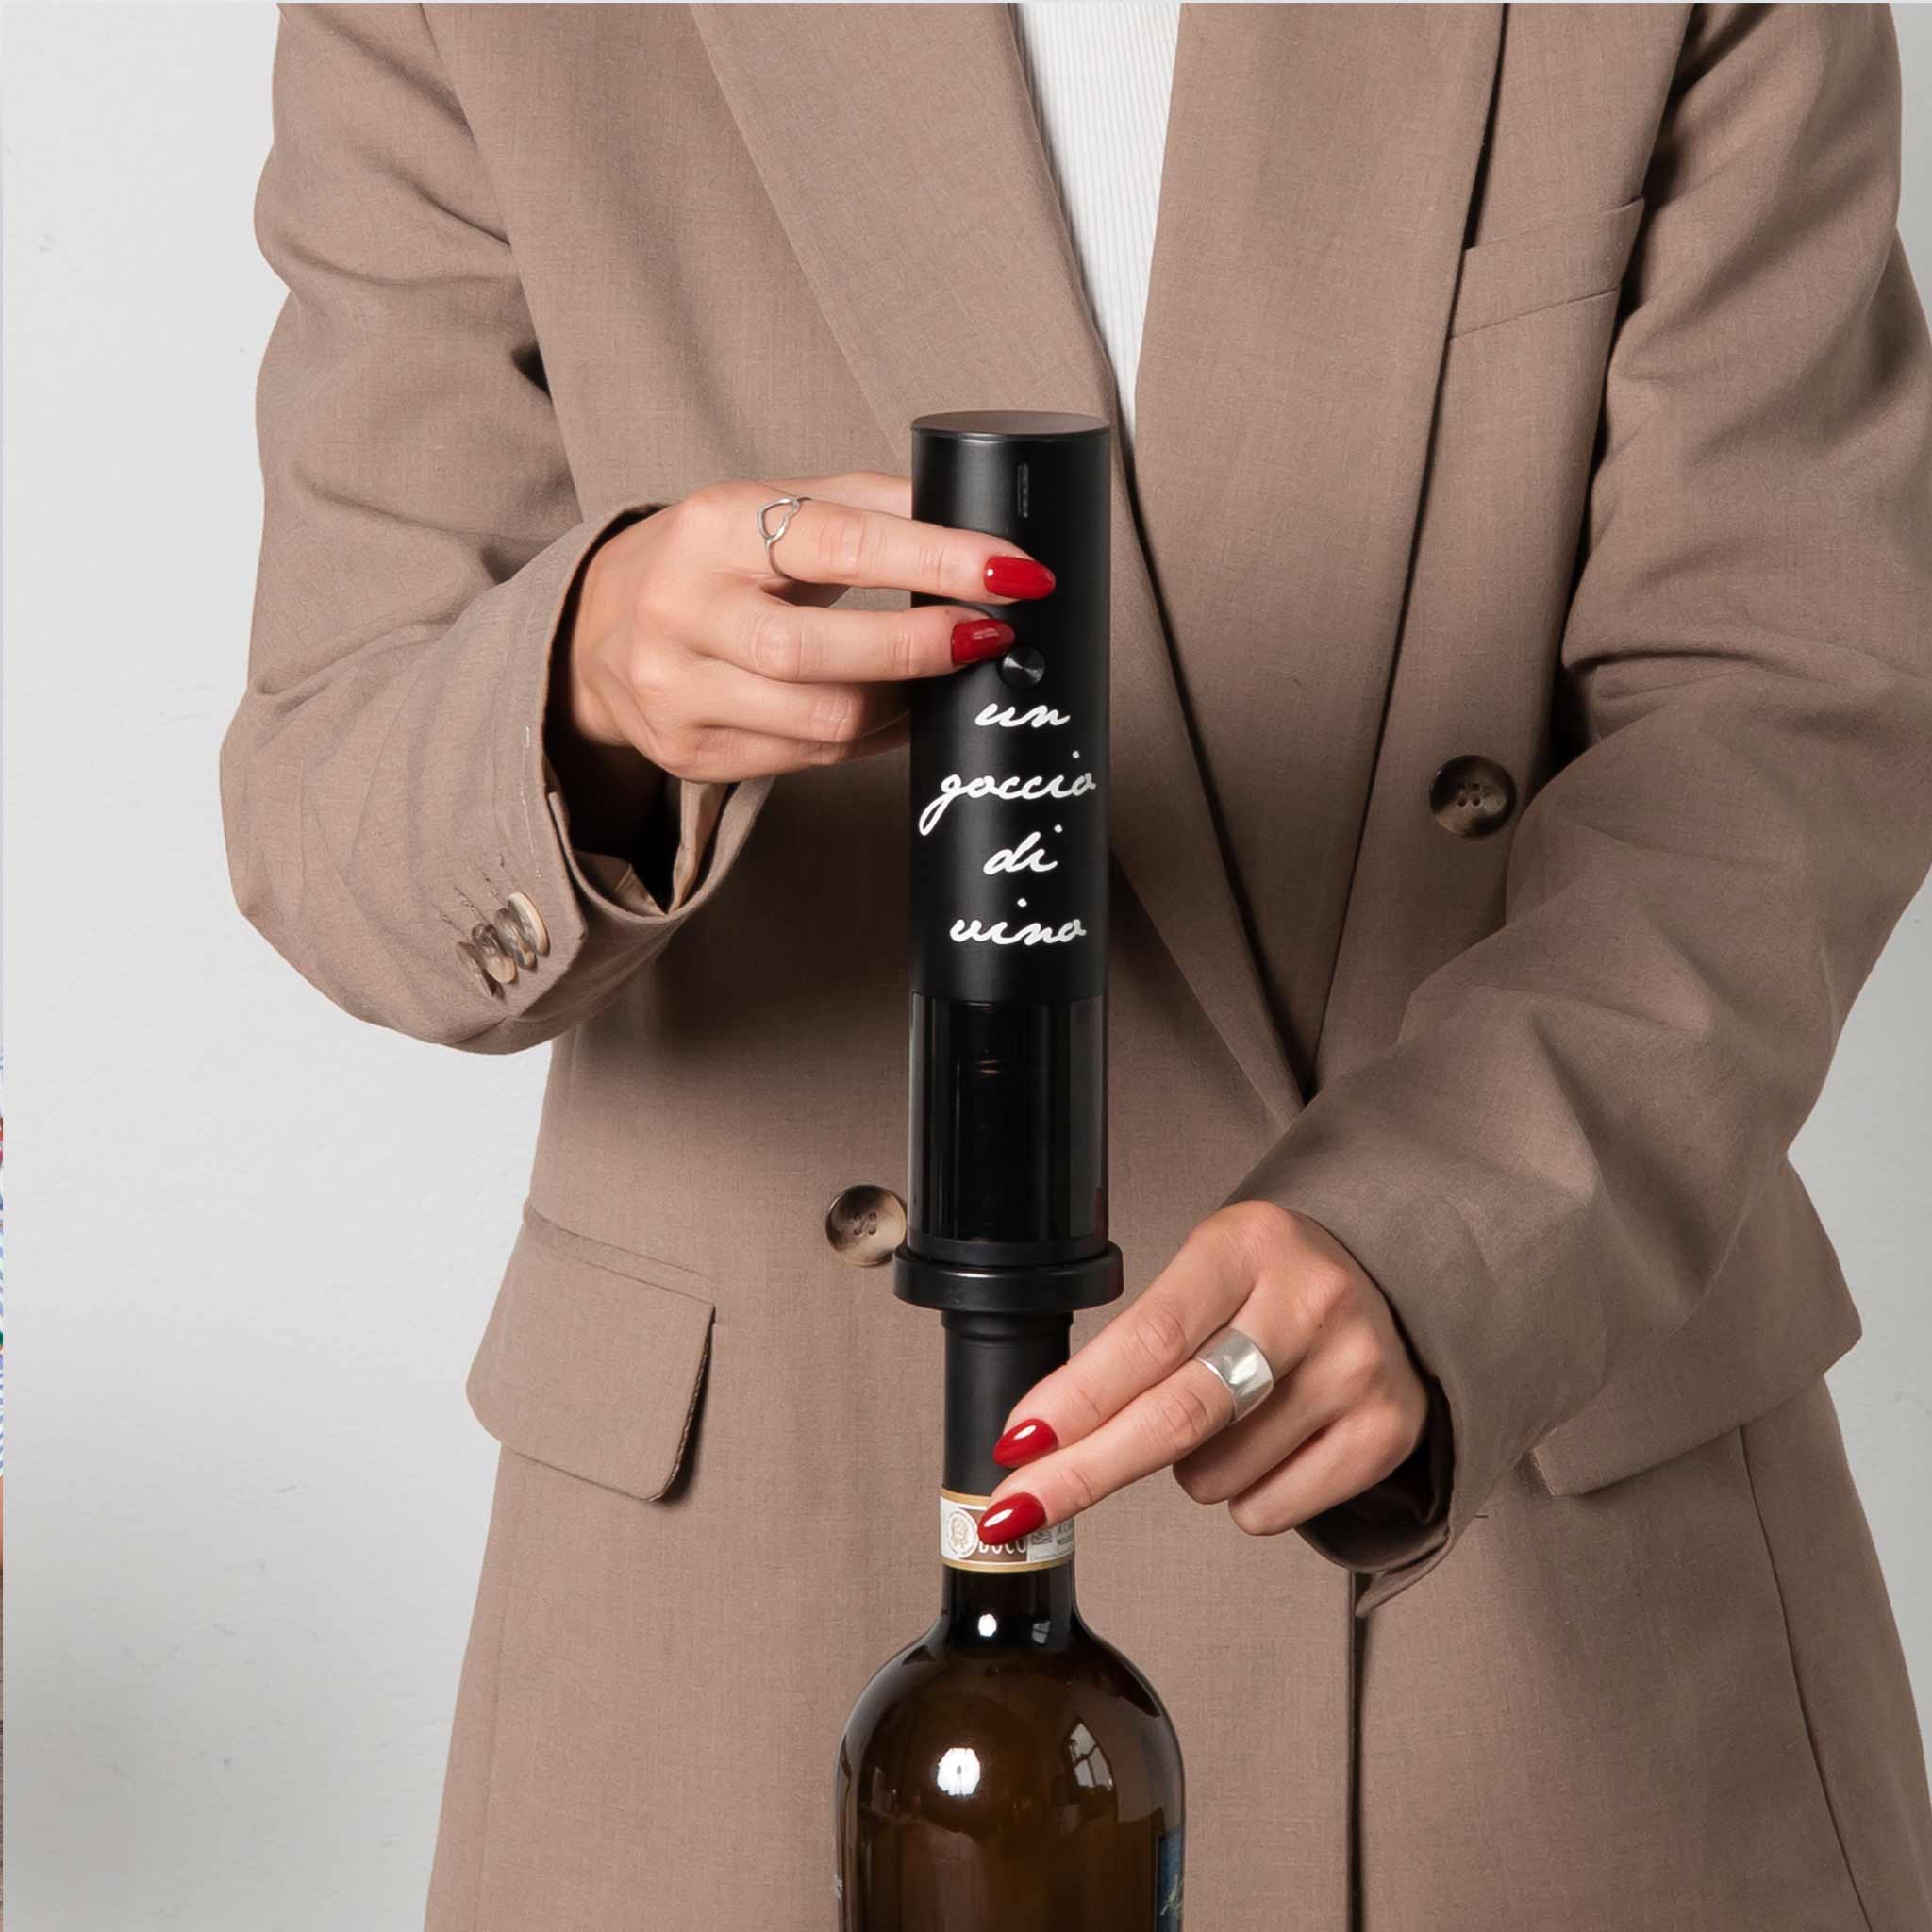 Electric bottle opener "A drop of wine"